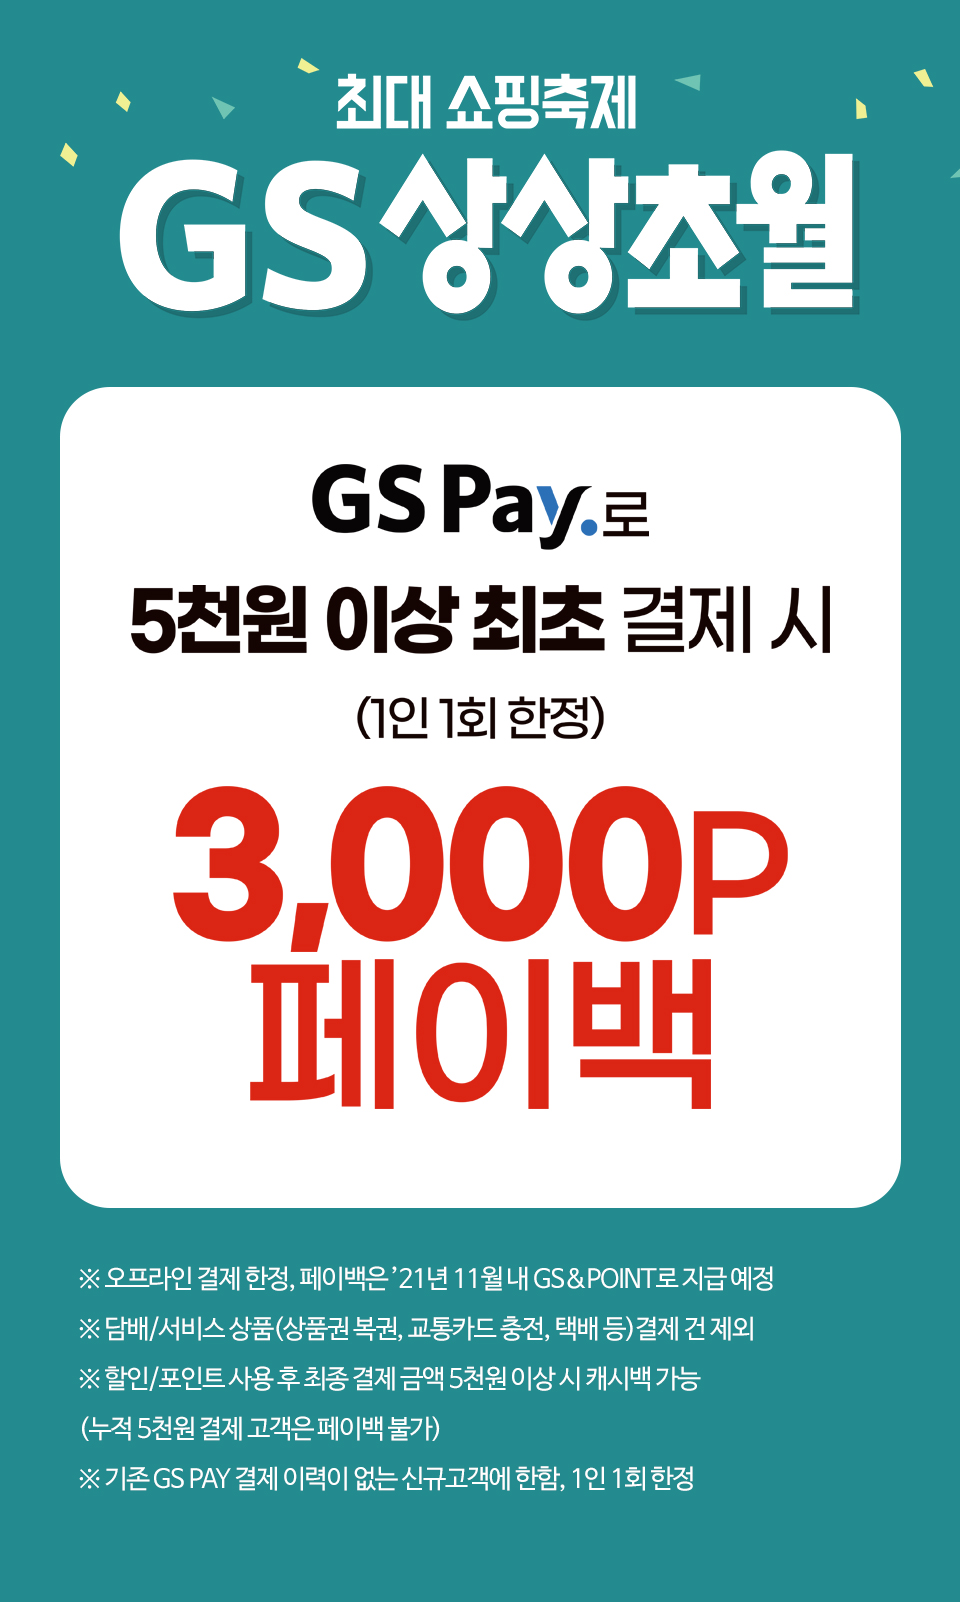 GSPay로 5천원 이상 최초 결제 시 3,000P 페이백